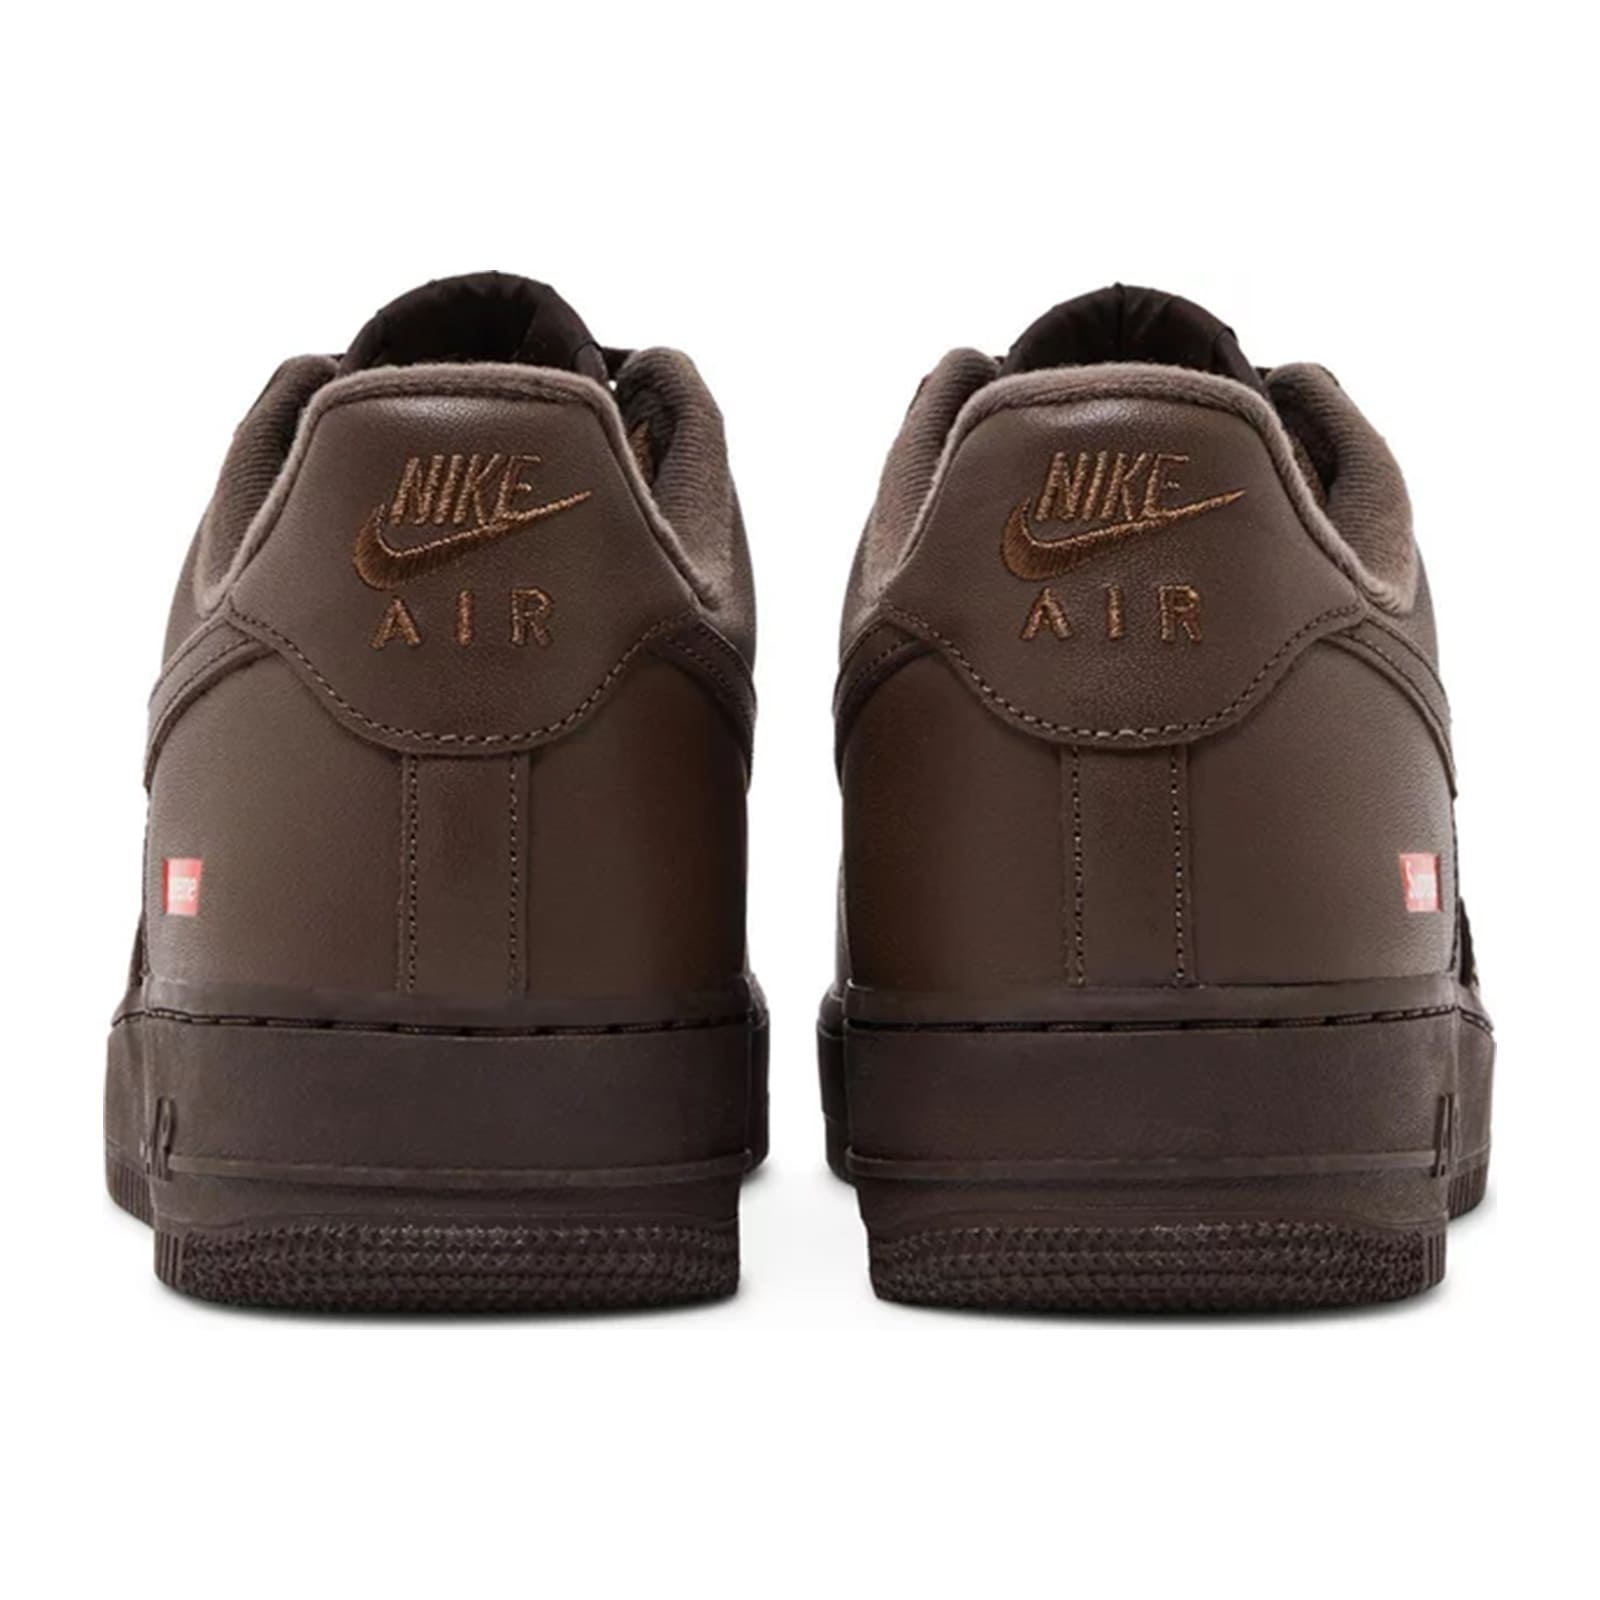 Nike nike huarache black yellow suede sandals, Supreme Box Logo- Baroque Brown